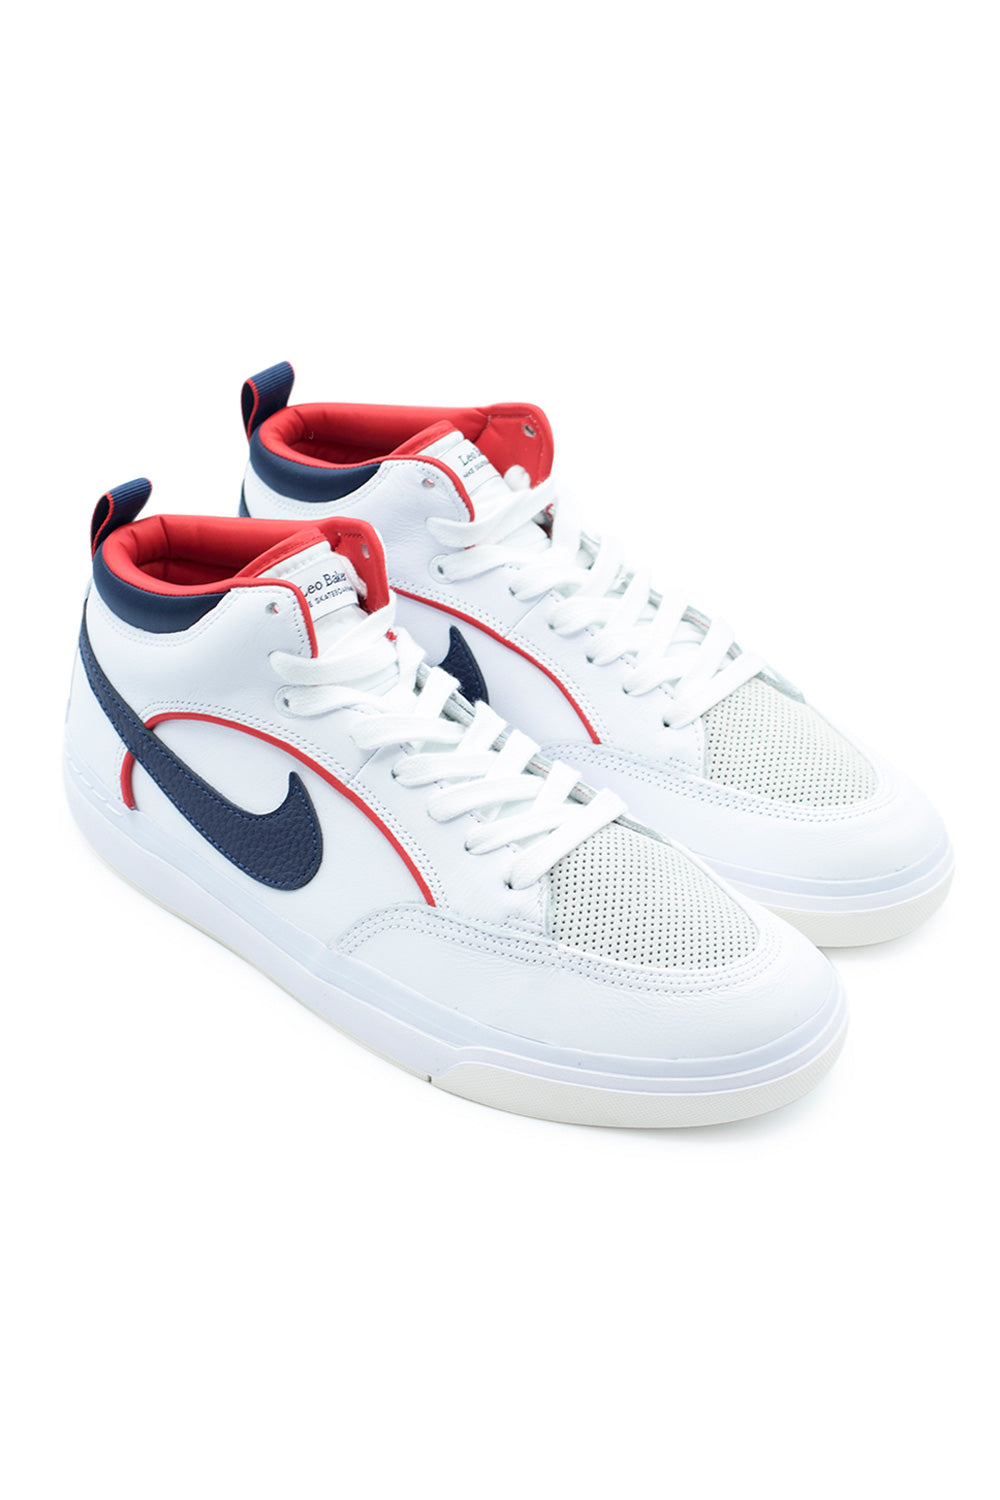 Nike SB React Leo PRM Shoe White / Midnight Navy - BONKERS